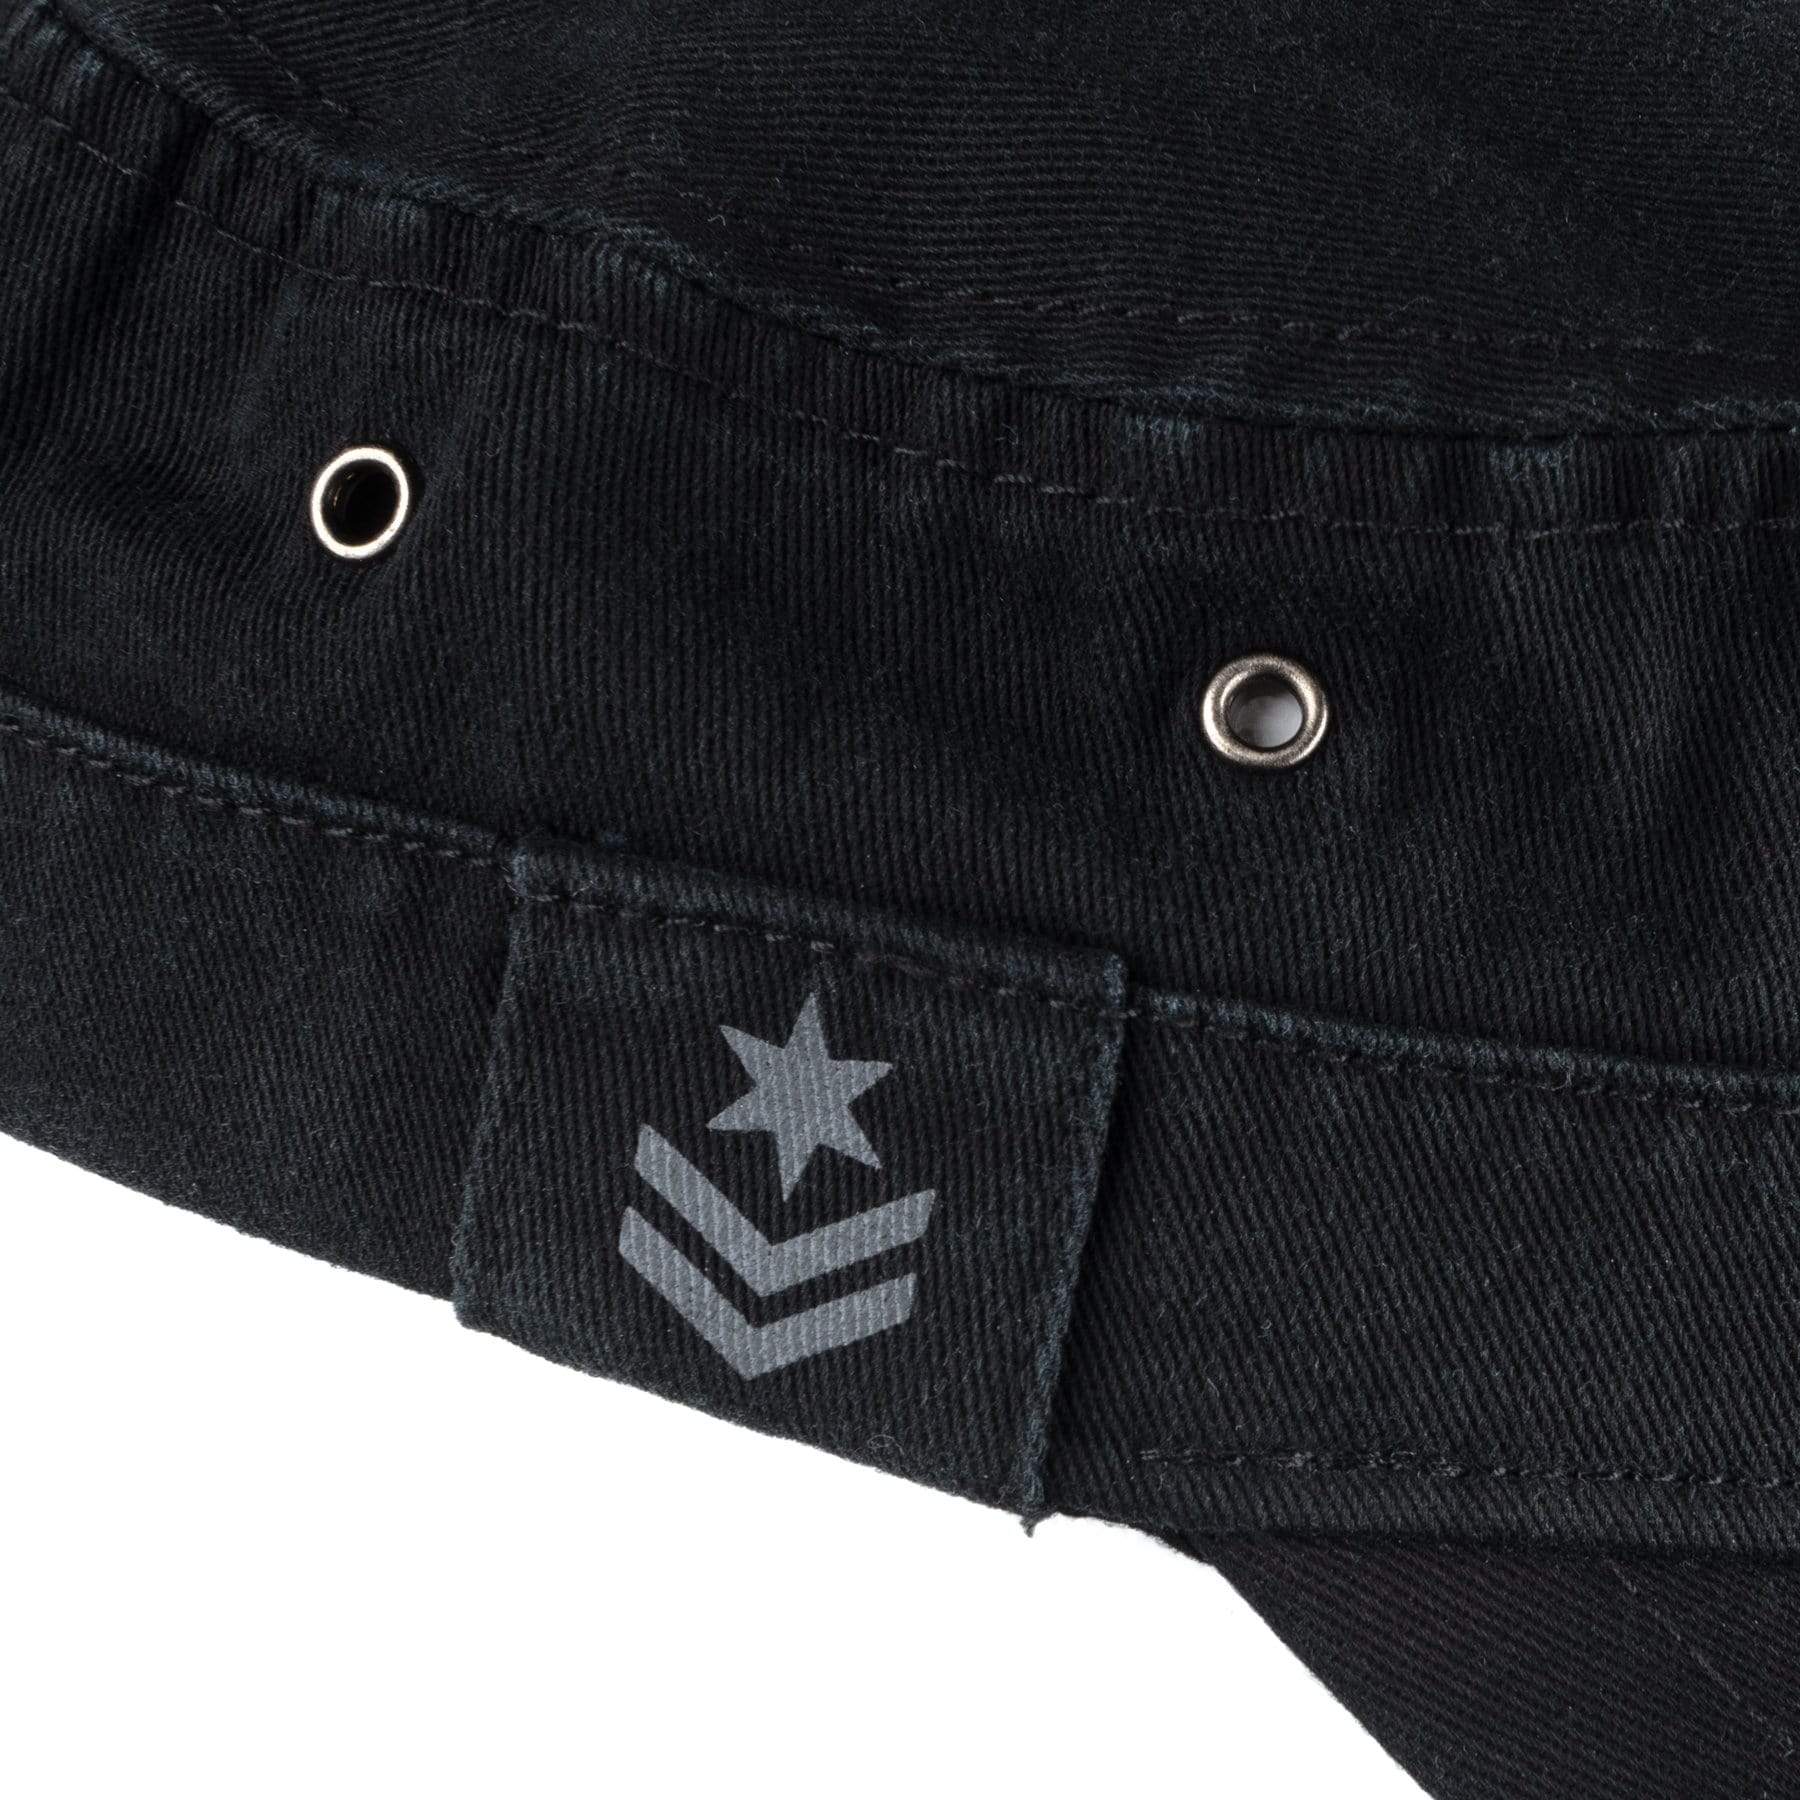 Wornstar Clothing Hat Enlisted Cadet Hat